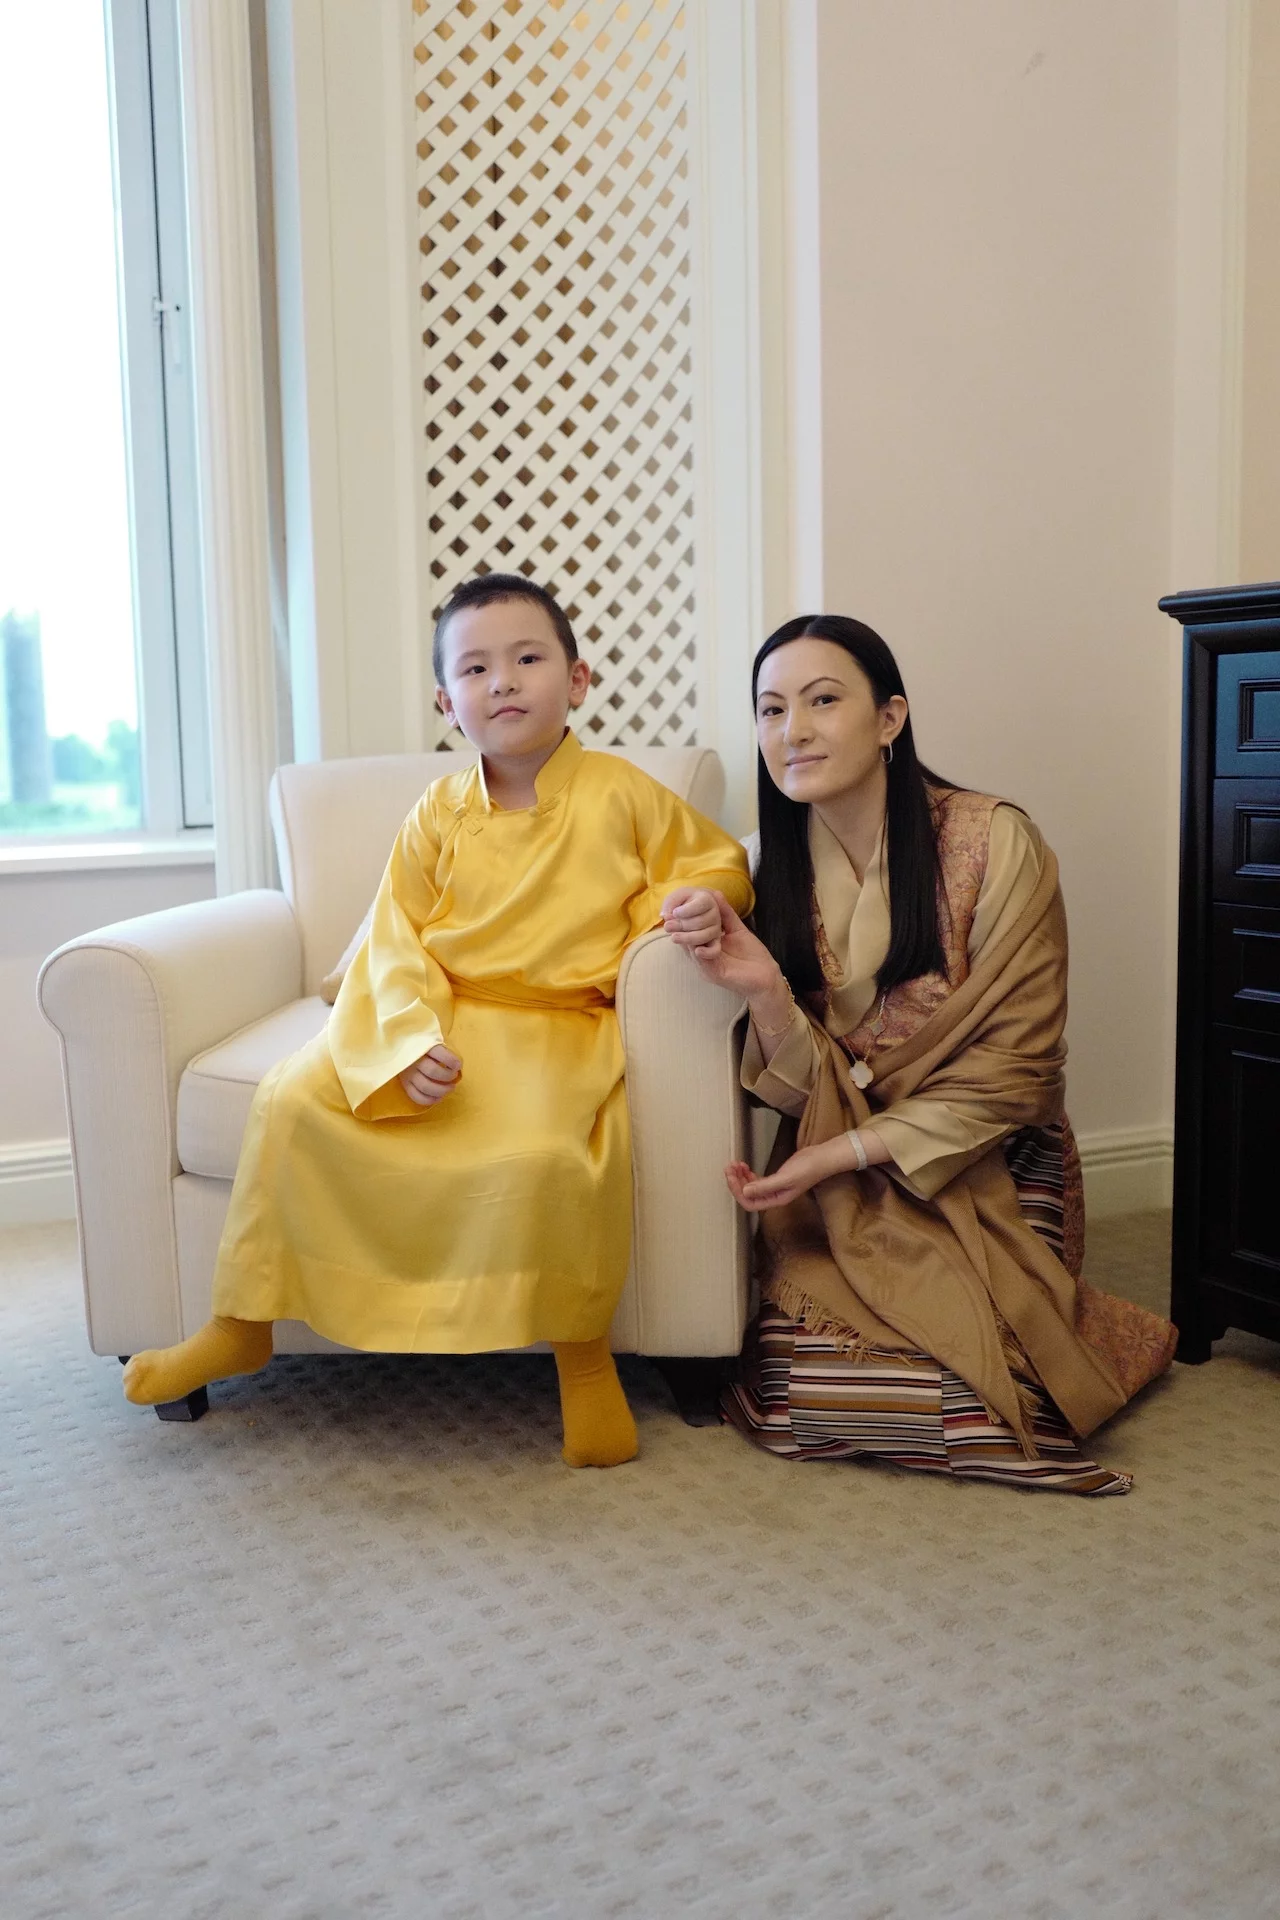 Thugseyla et Sangyumla. Photo avec l'aimable autorisation de Karmapa.